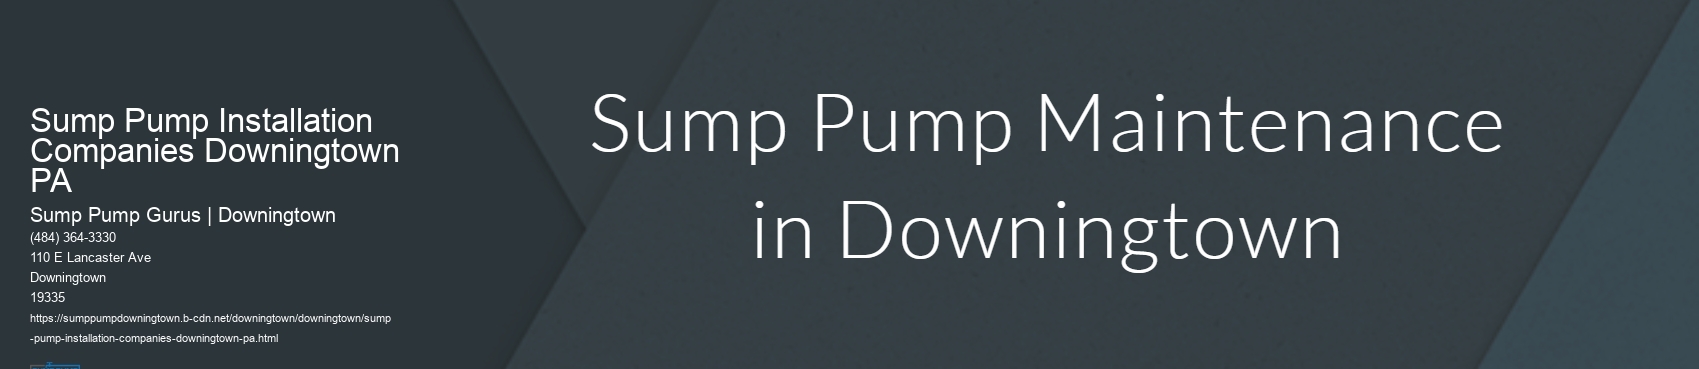 Sump Pump Installation Companies Downingtown, PA